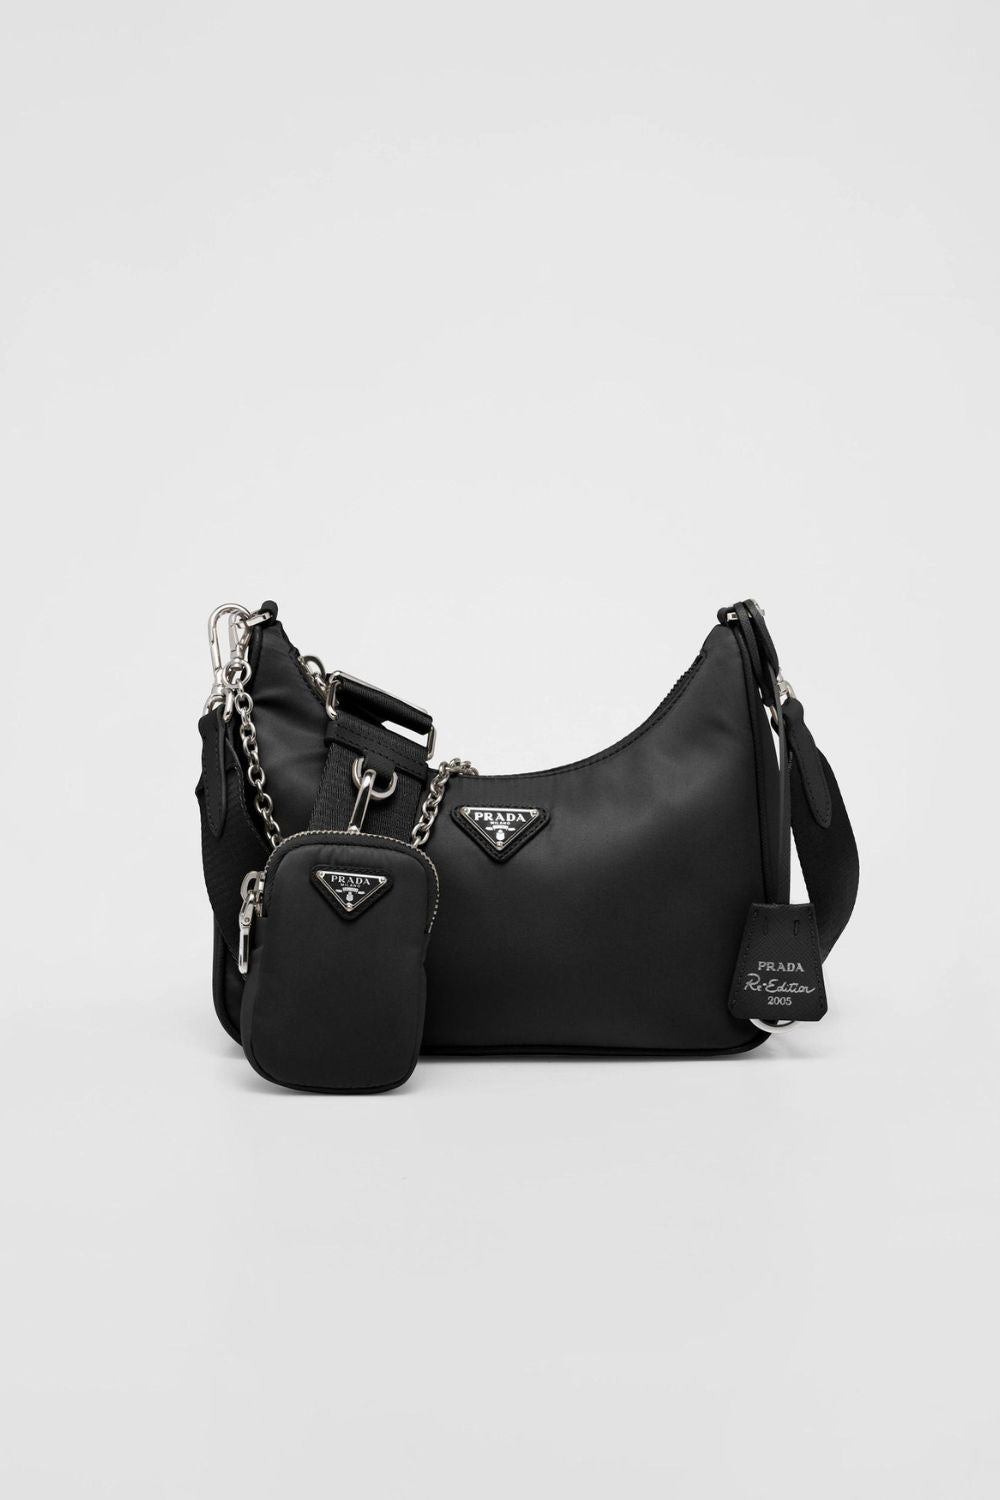 Prada | Re edition 2005 Shoulder Bag | Black